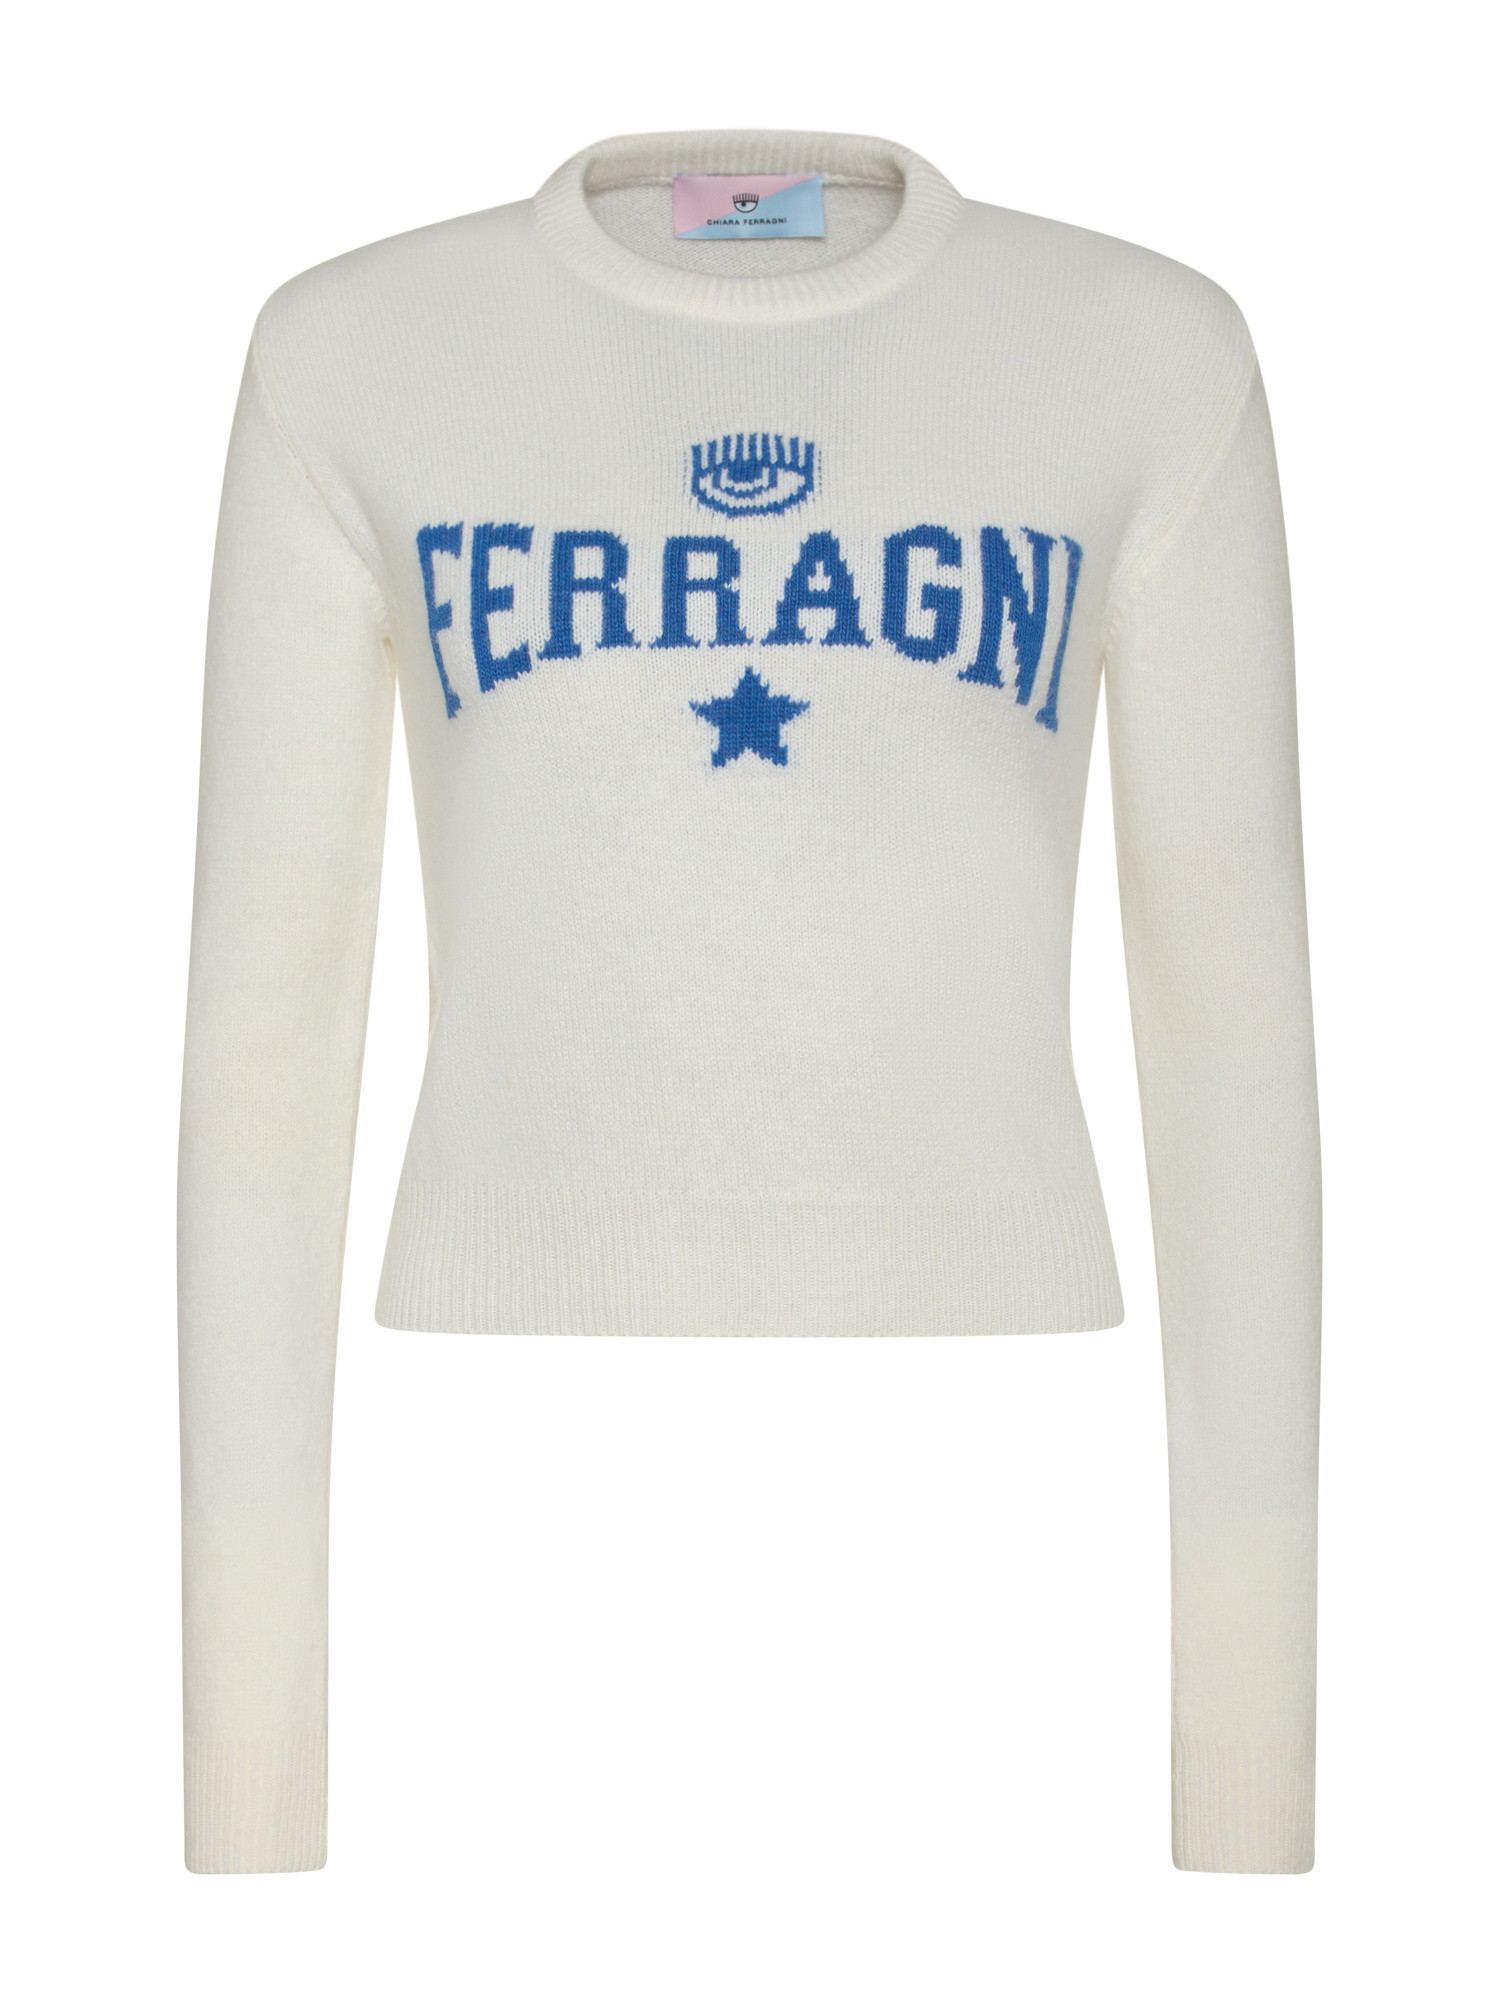 цена Chiara Ferragni эластичный свитер Ferragni, белый